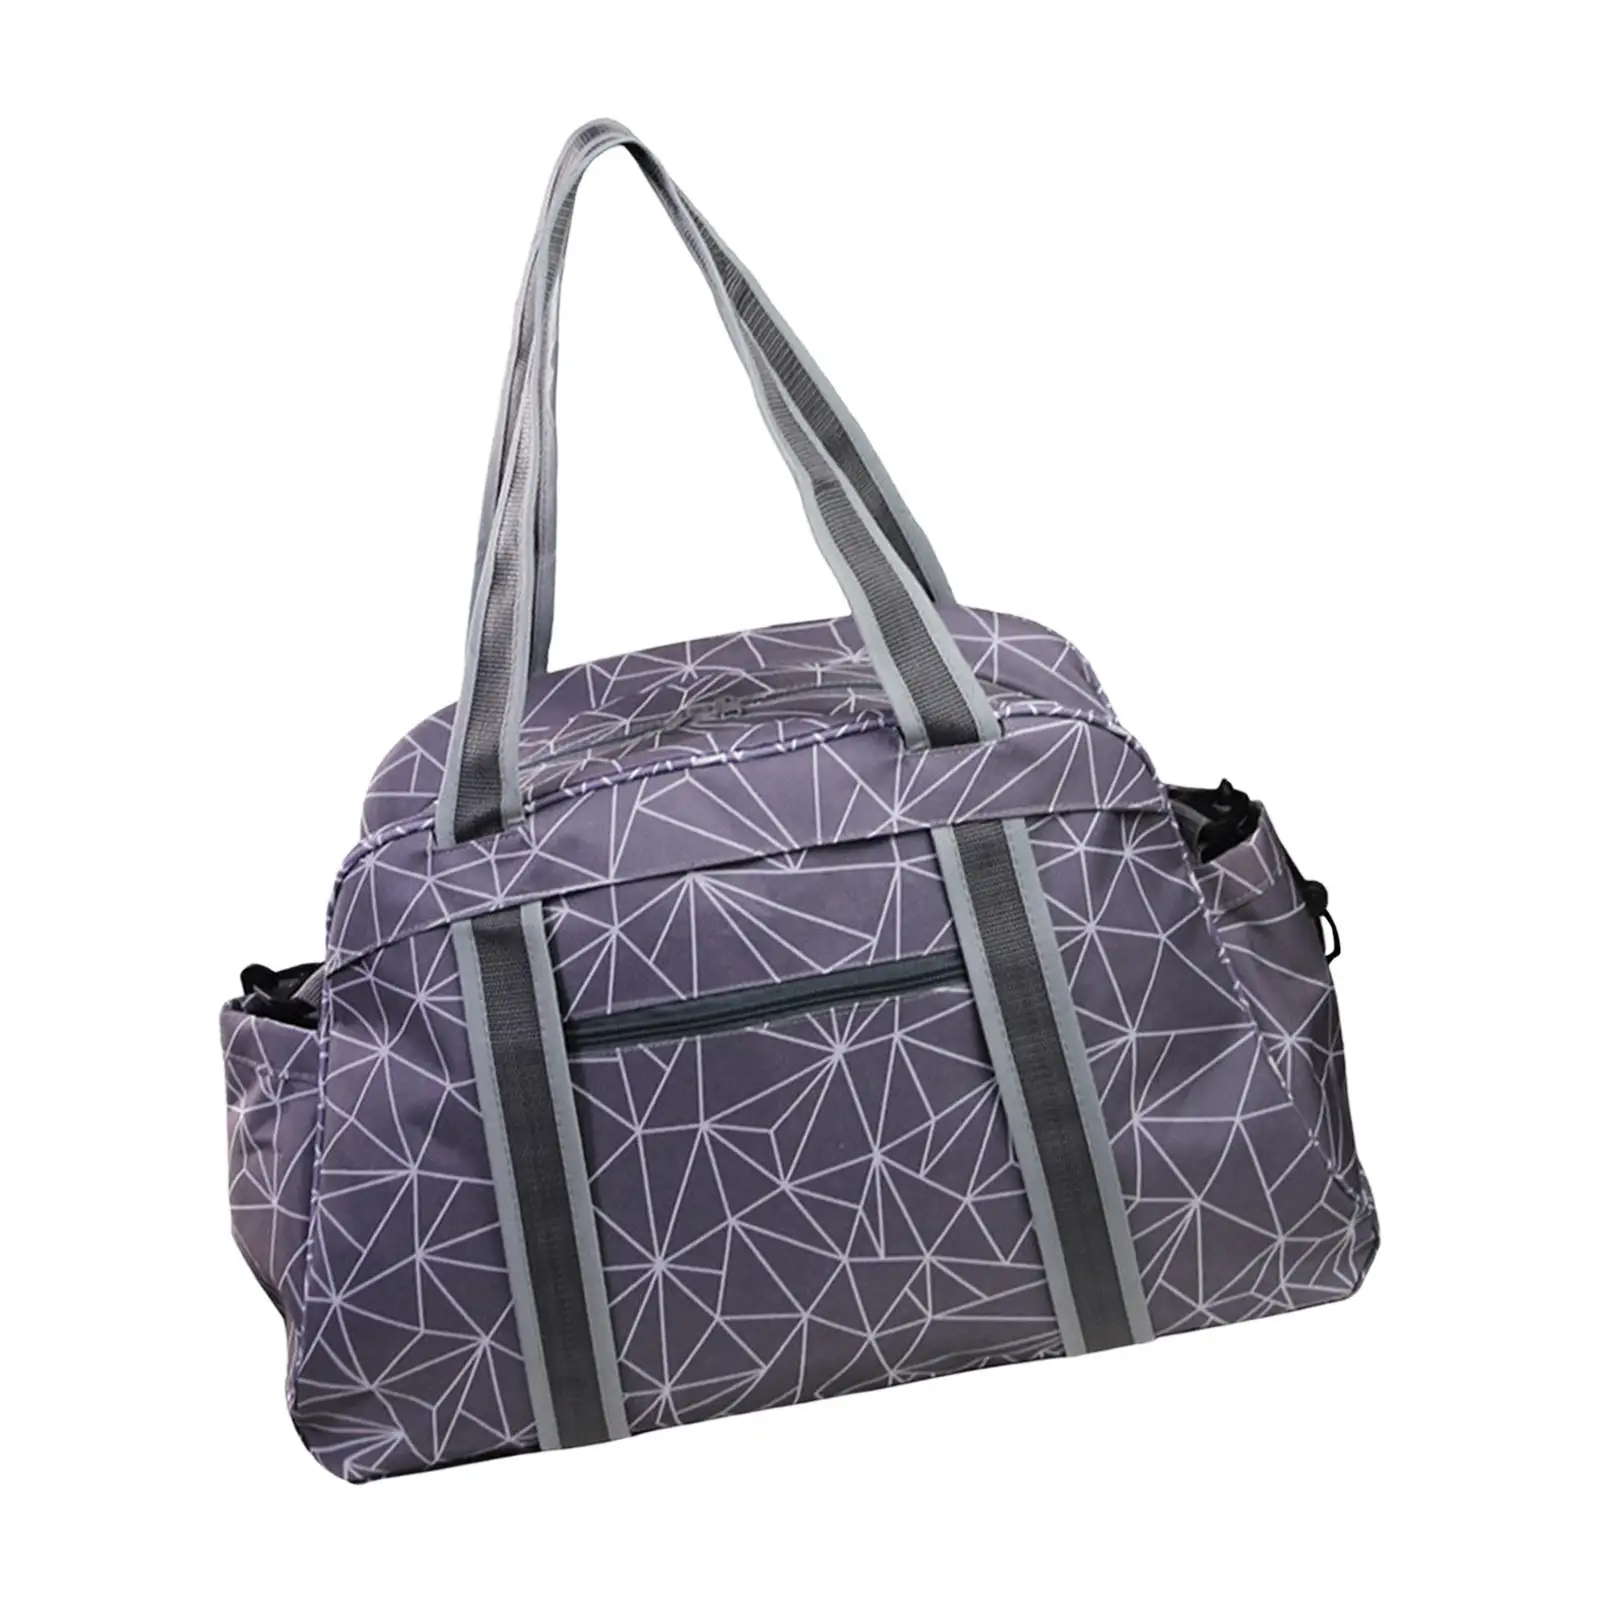 Portable Sports Gym Bag Weekender Bag Carry On Tear Resistant Yoga Mat Holder Large Capacity Travel Duffle Bag for Apparel Trip